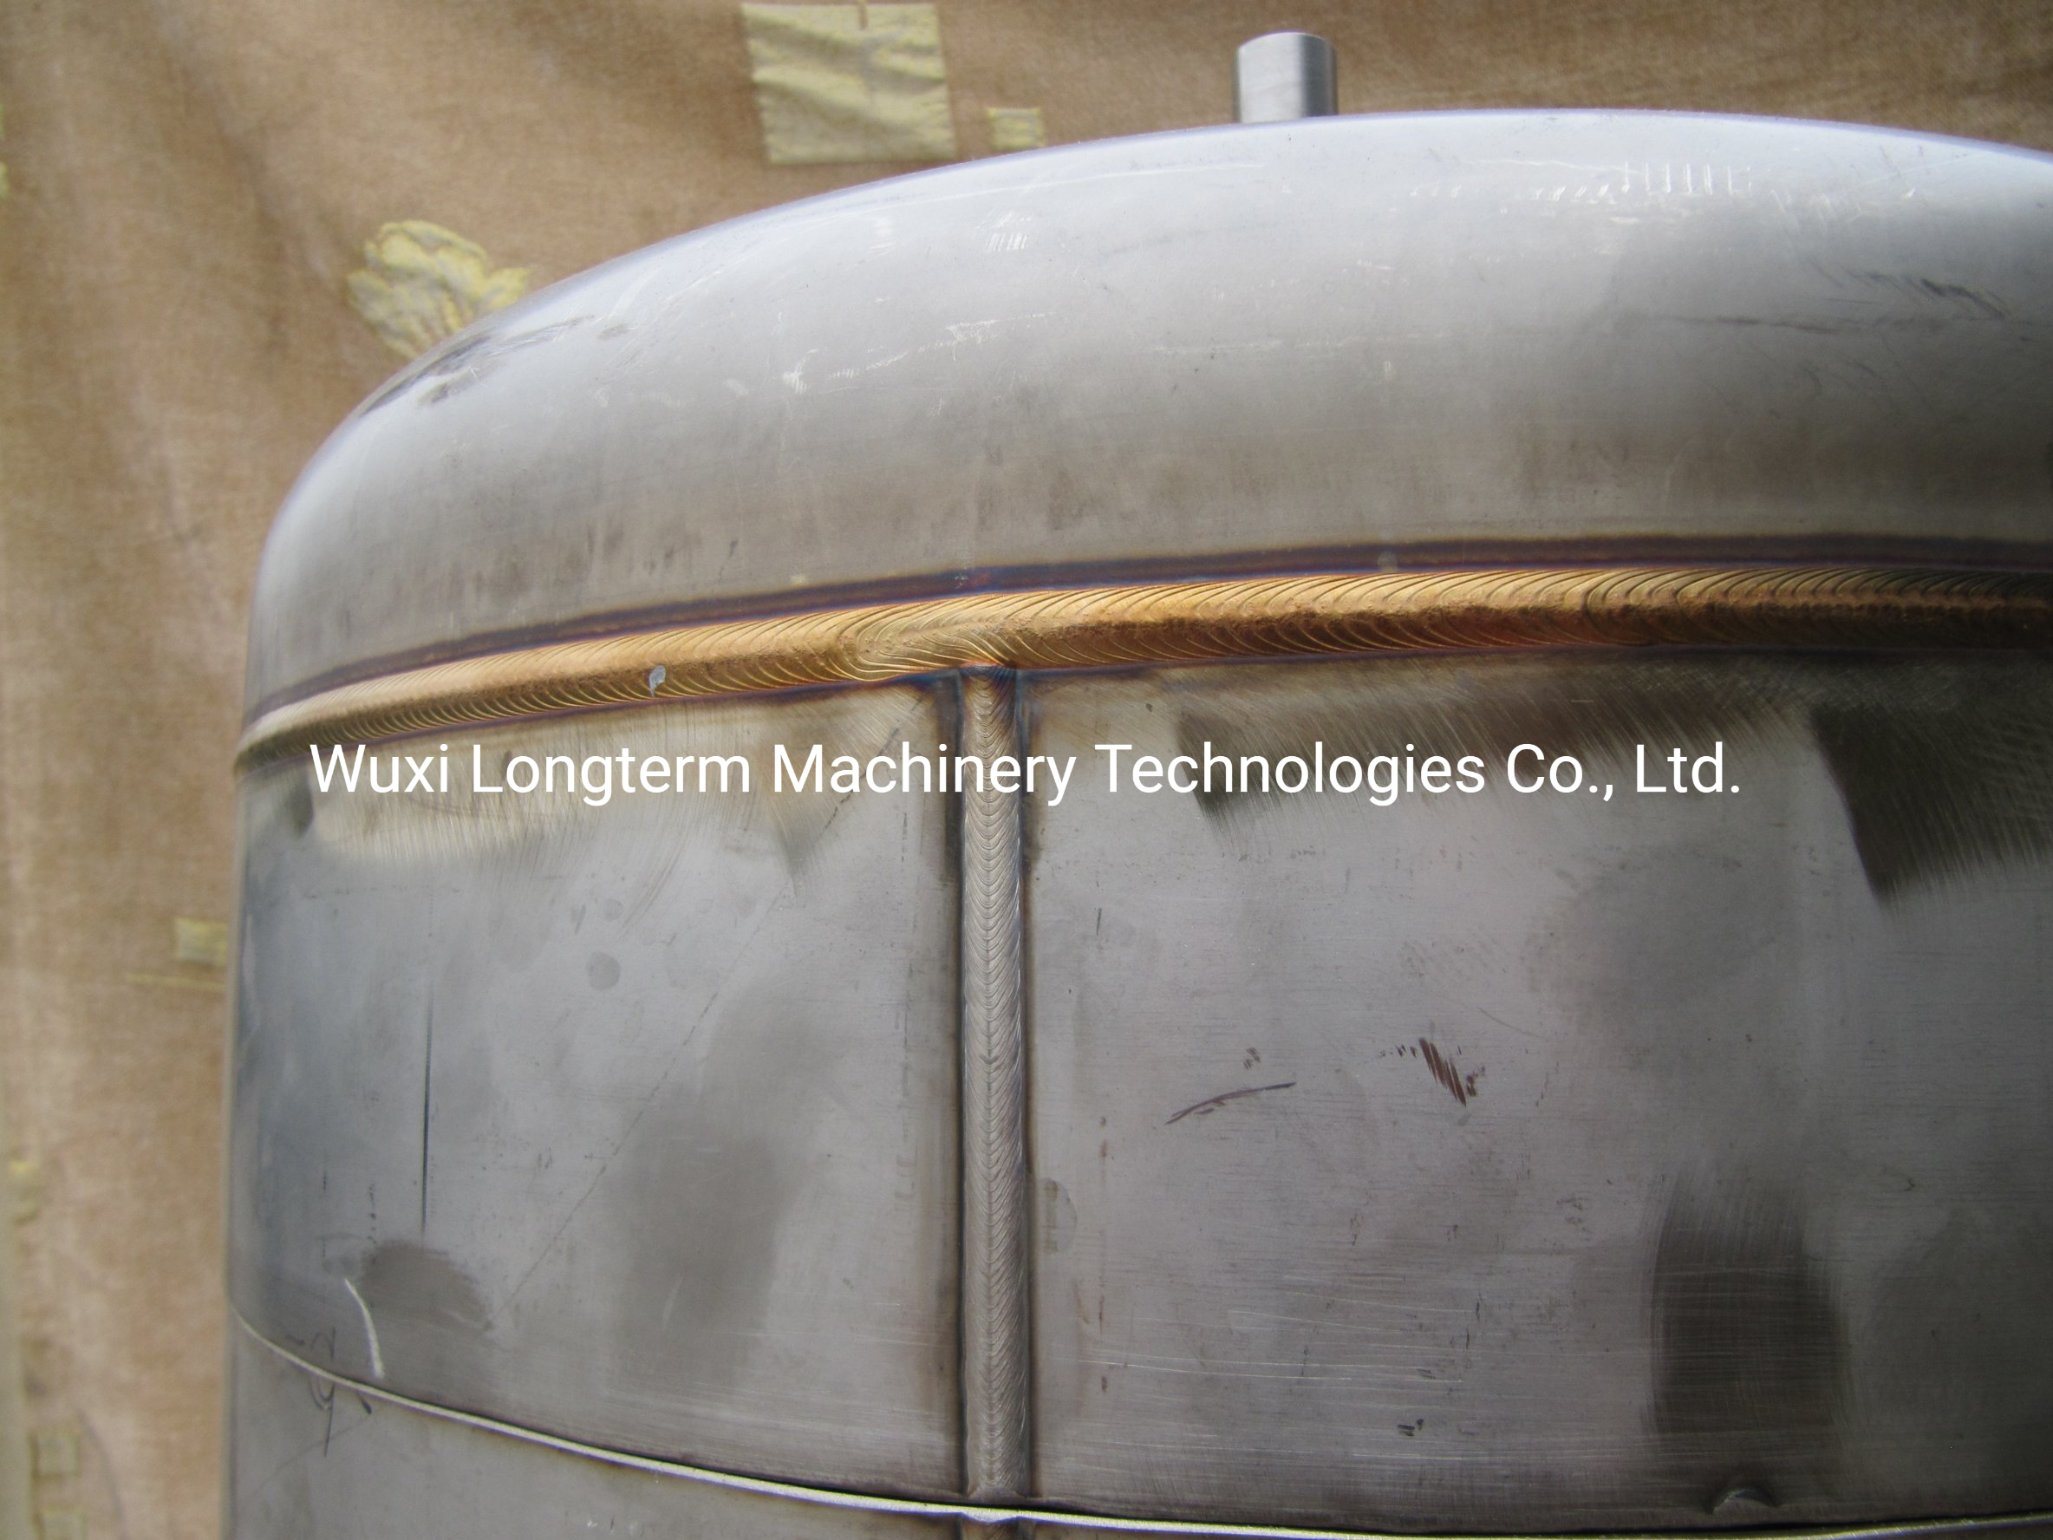 Normal LNG Gas Tank/ Cylinder TIG/MIG Welding Machine, Apt Circumferential/Girth/Seam/Longitidunal Welding Machine/